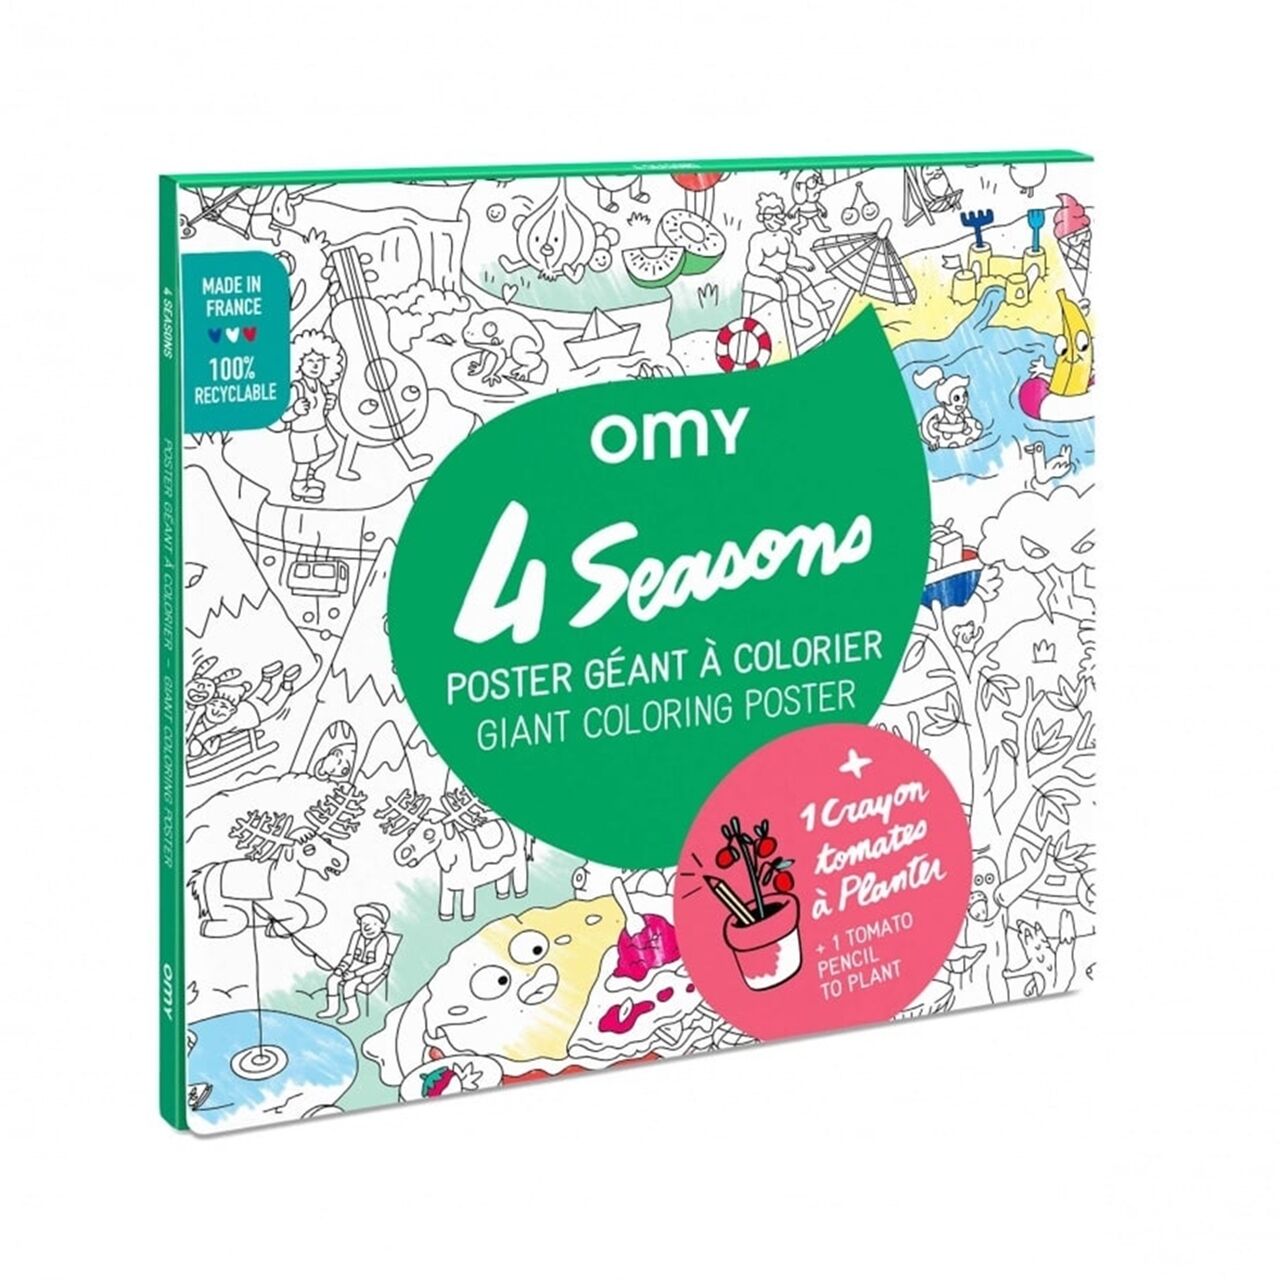 Omy Boyama Posteri - 4 Seasons + Planting Pencil